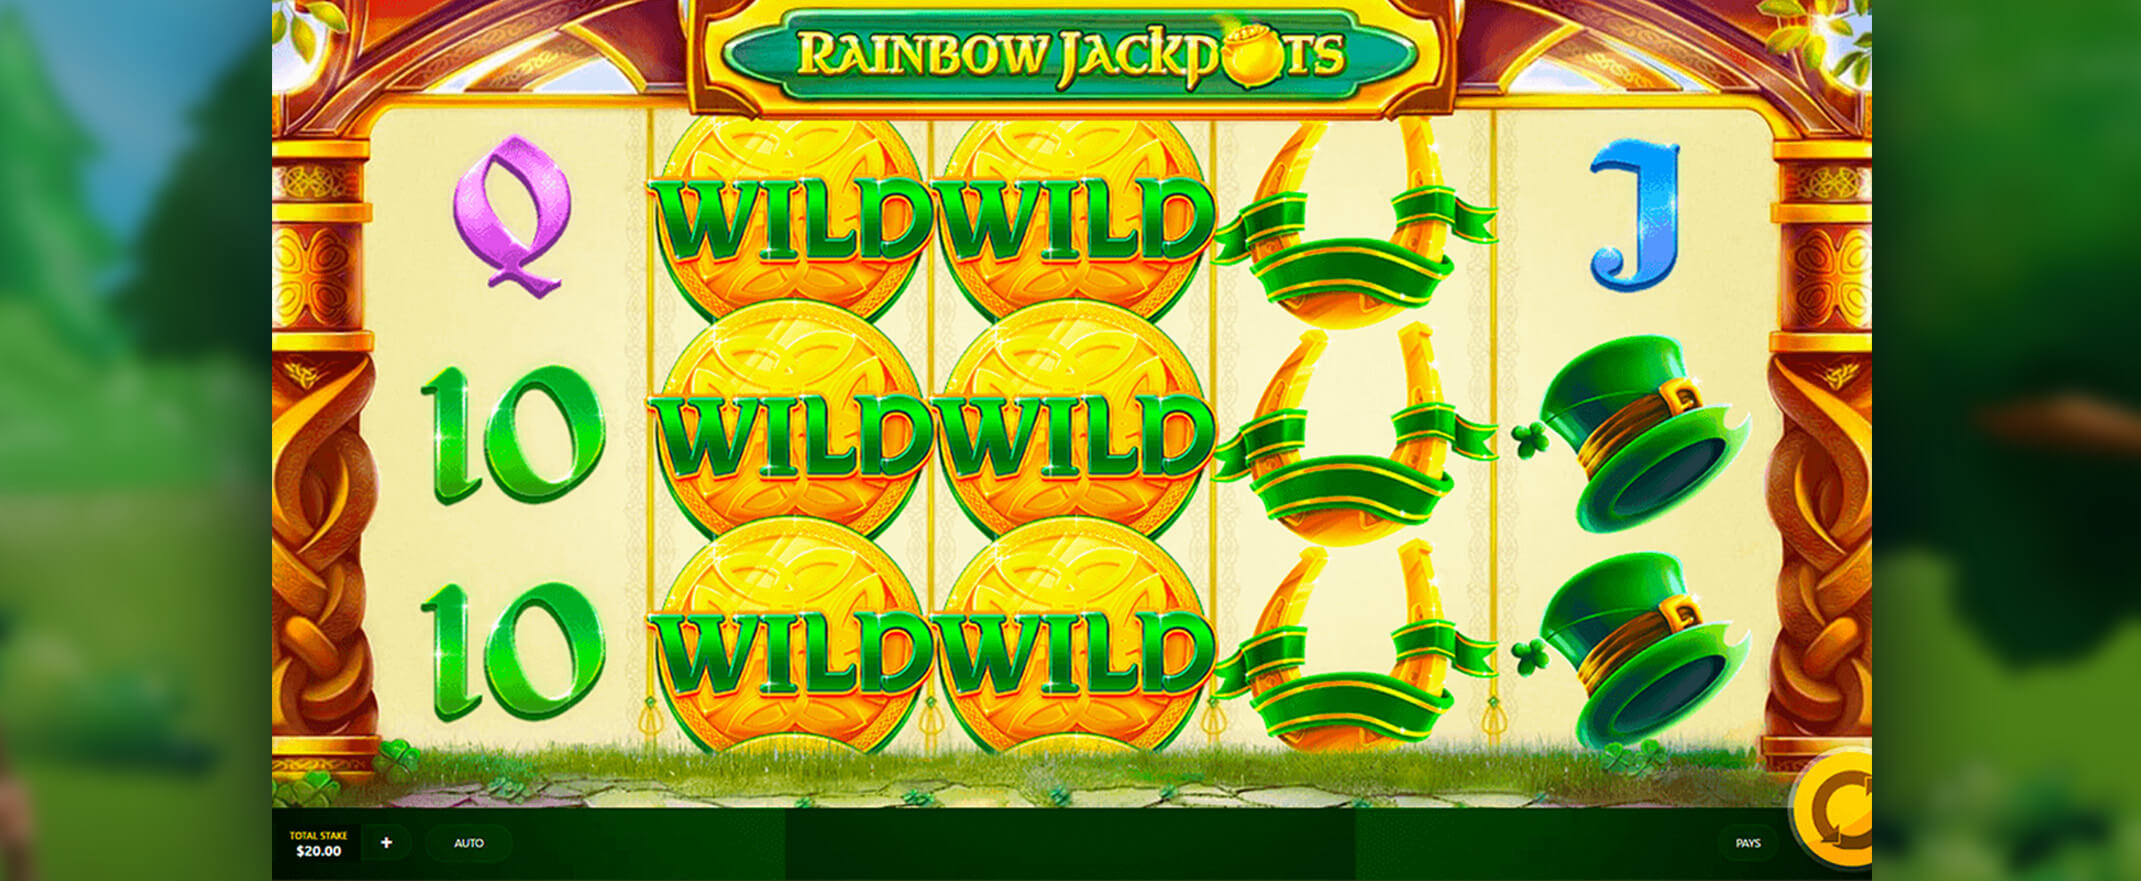 Rainbow Jackpots slot - image of the reels